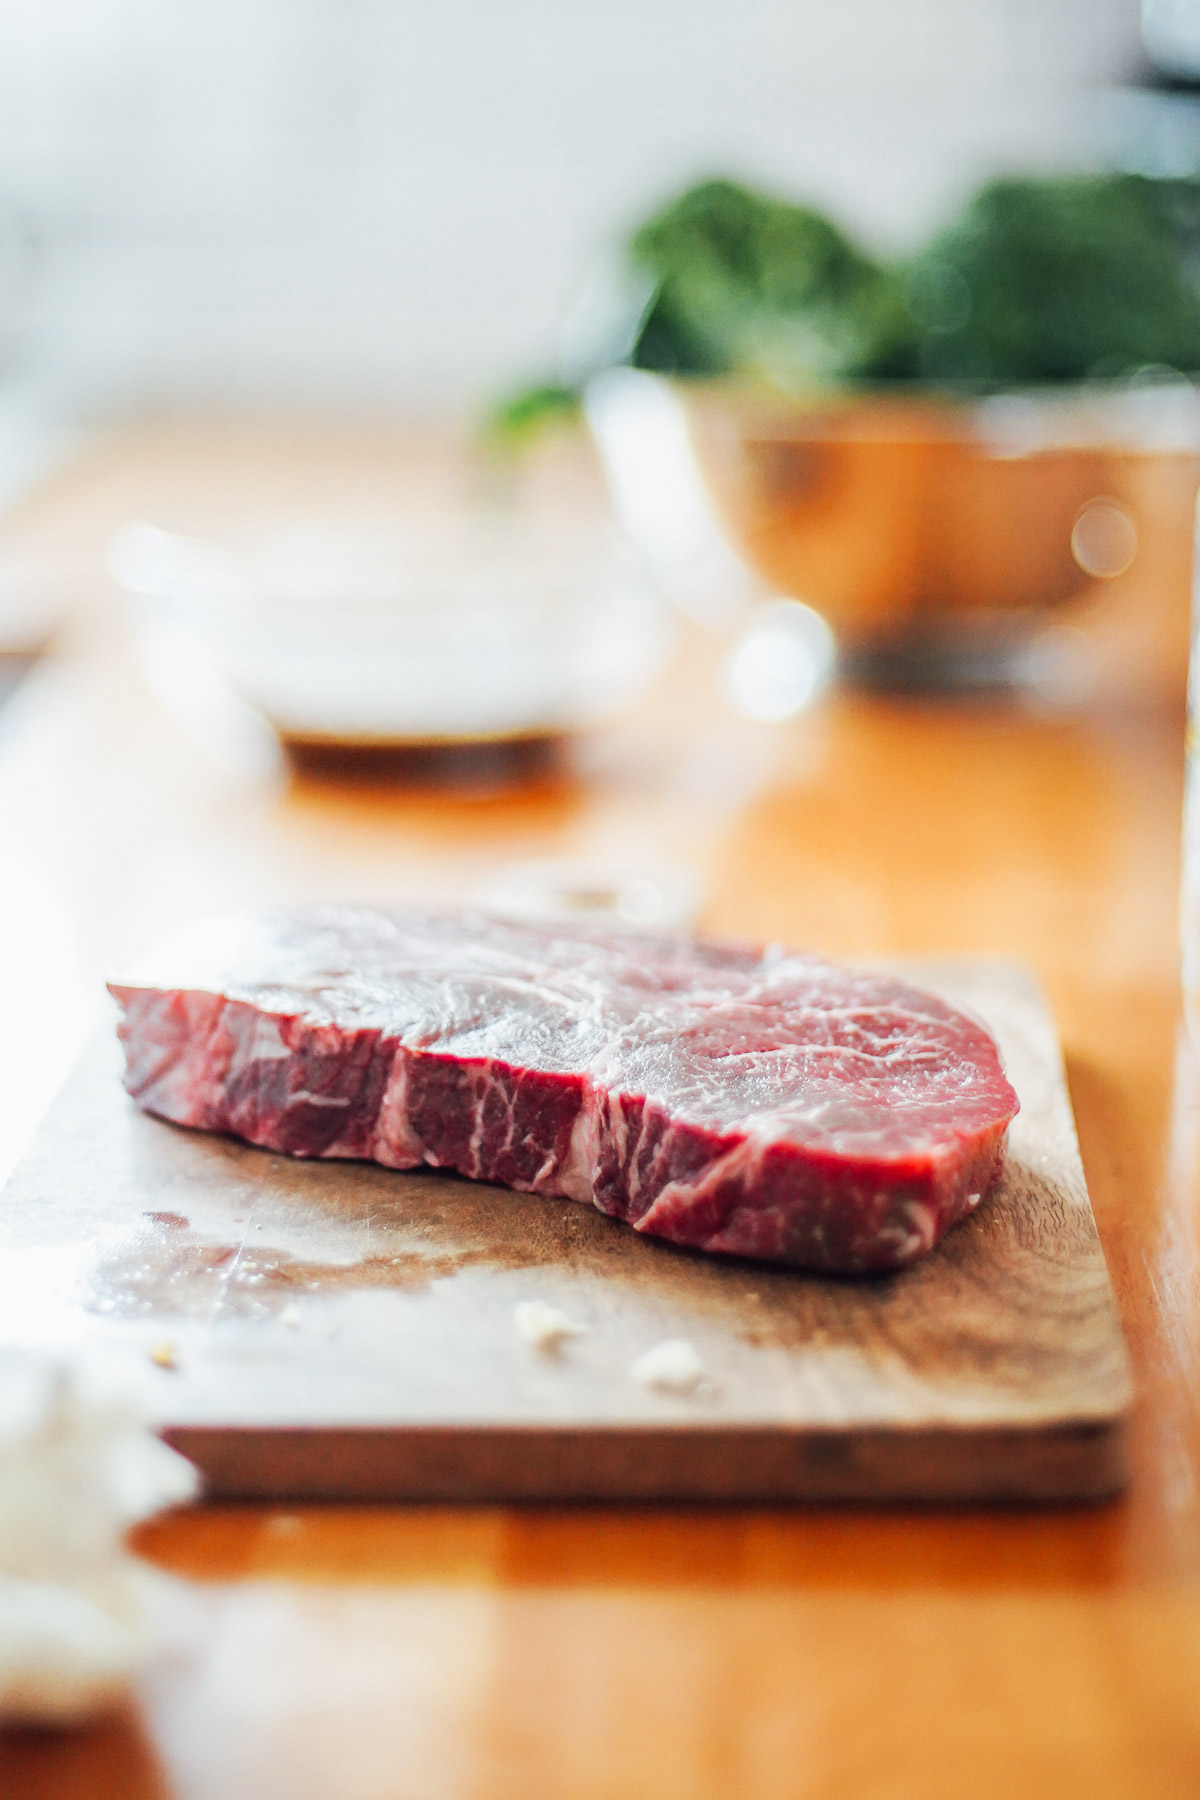 Top sirloin steak on a cutting board.